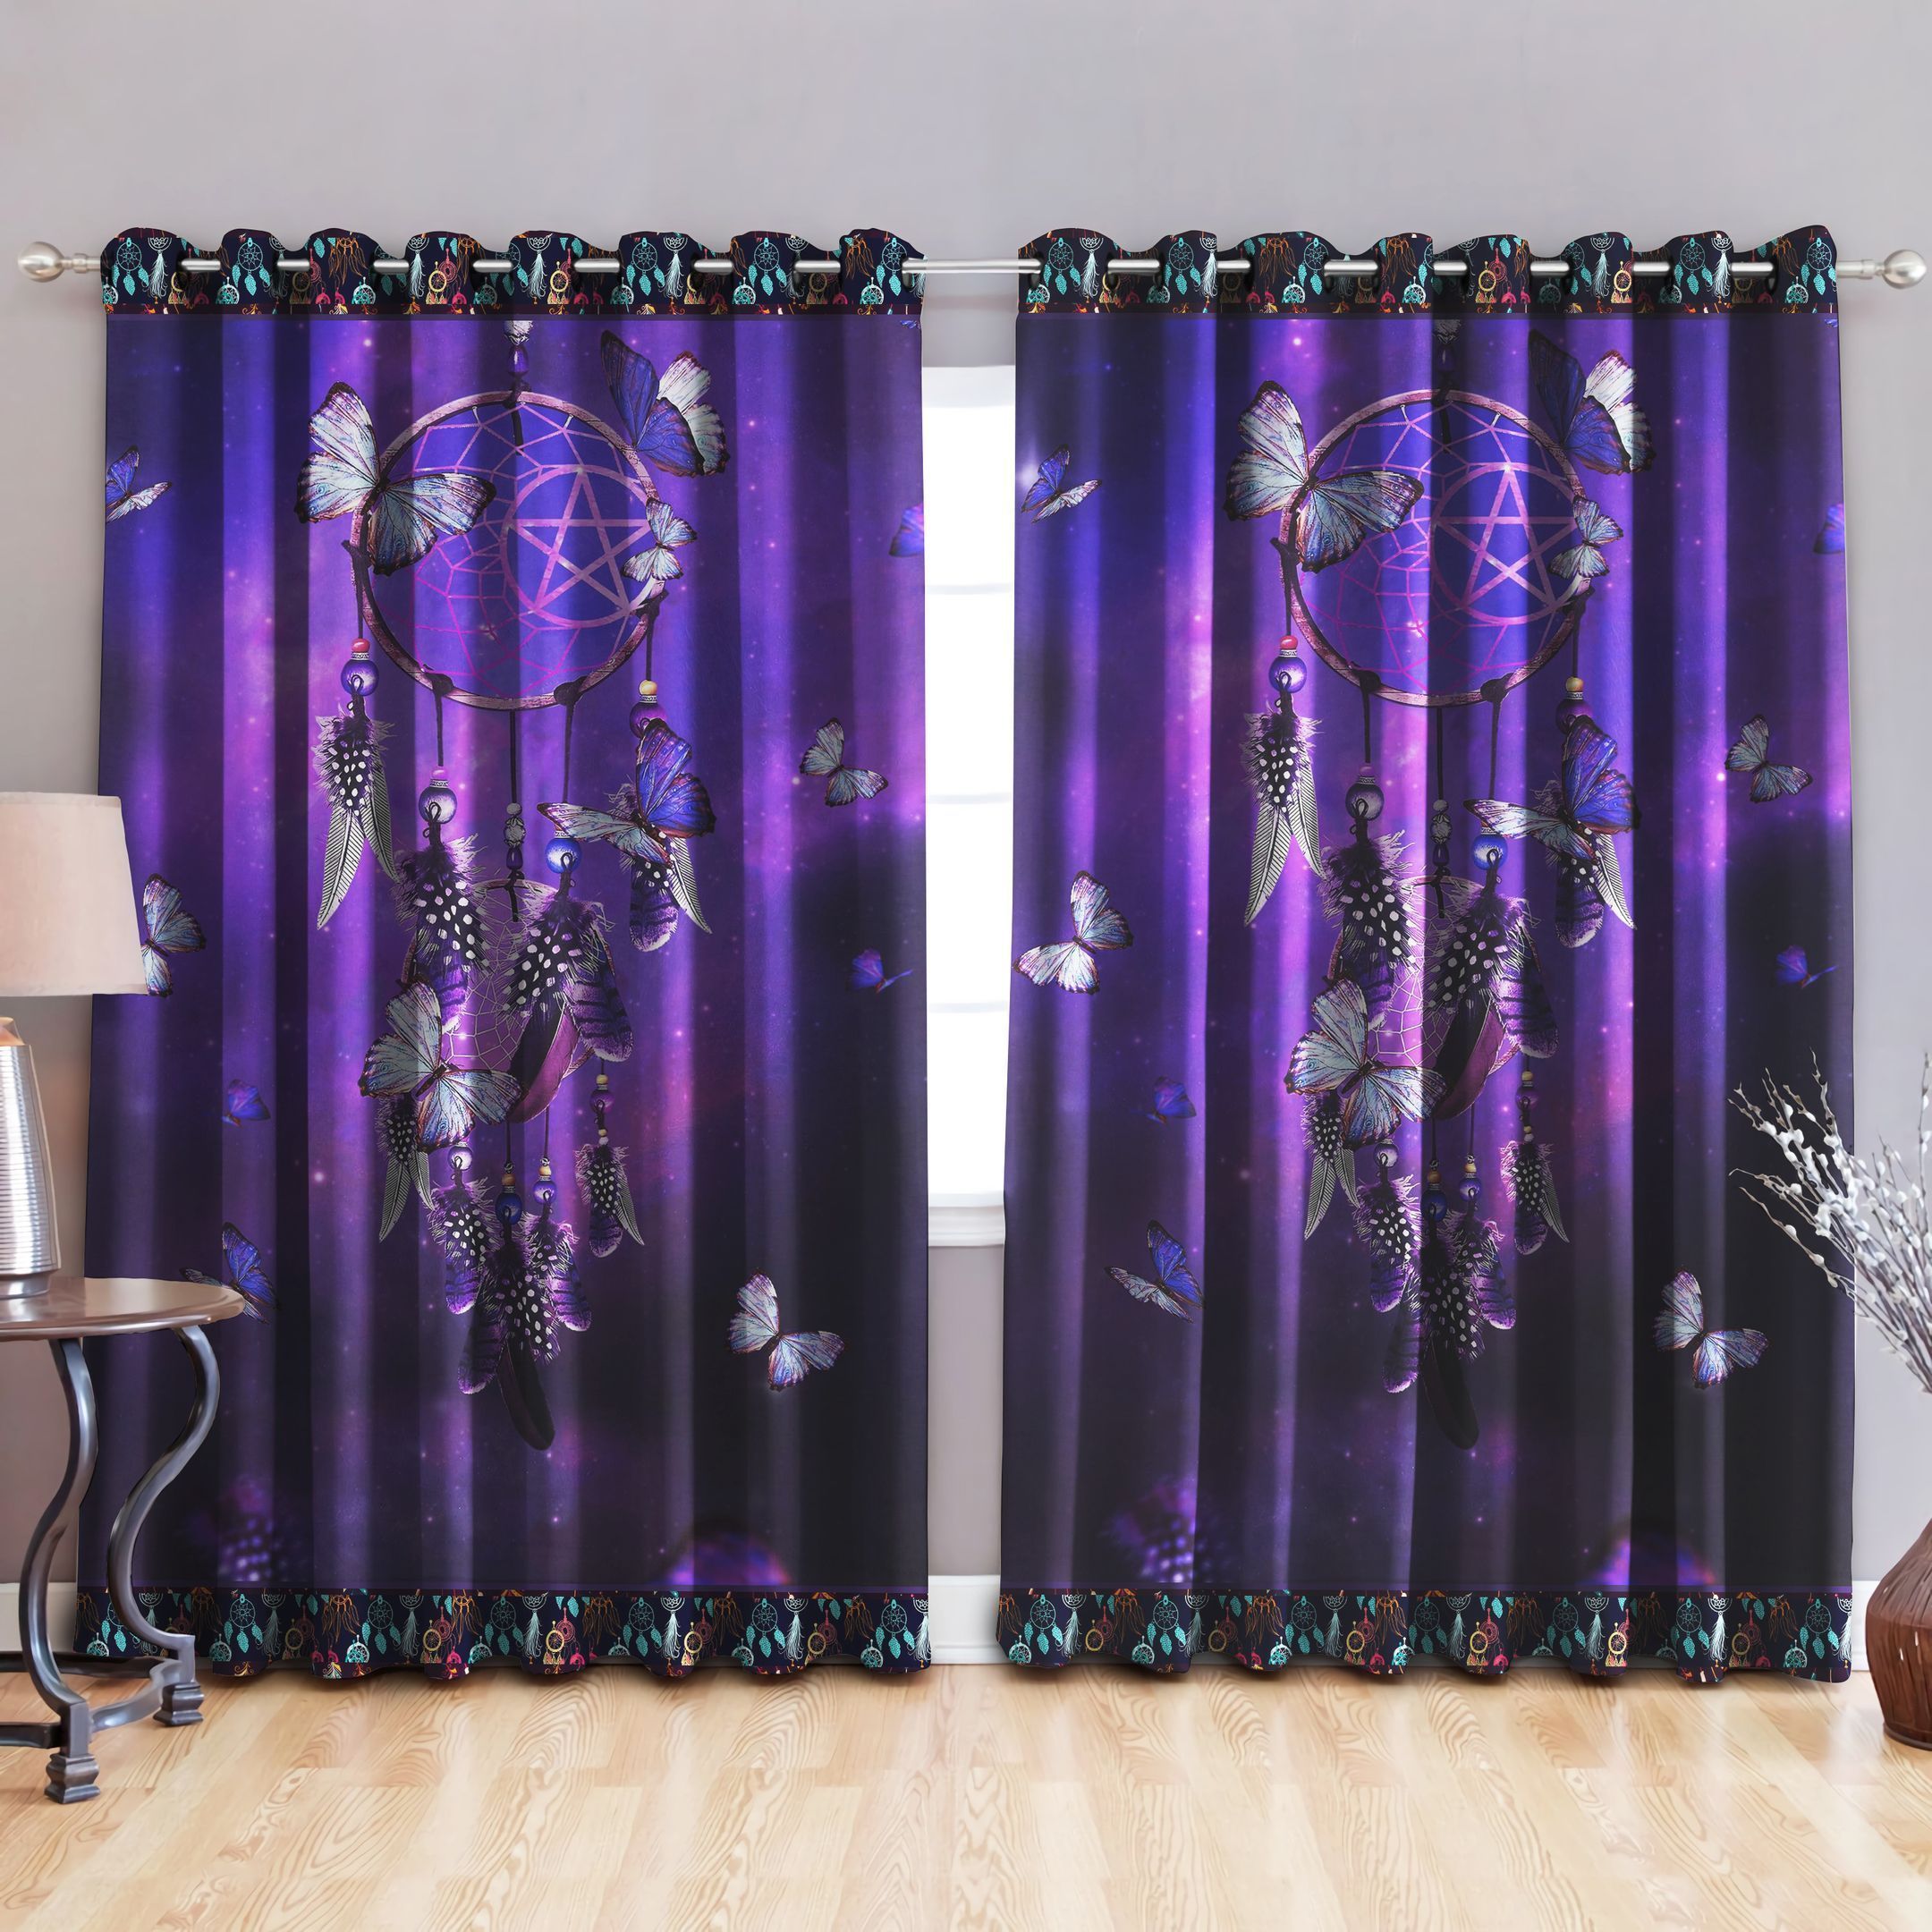 Purple Galaxy Dreamcatcher Butterfly Printed Window Curtain Home Decor